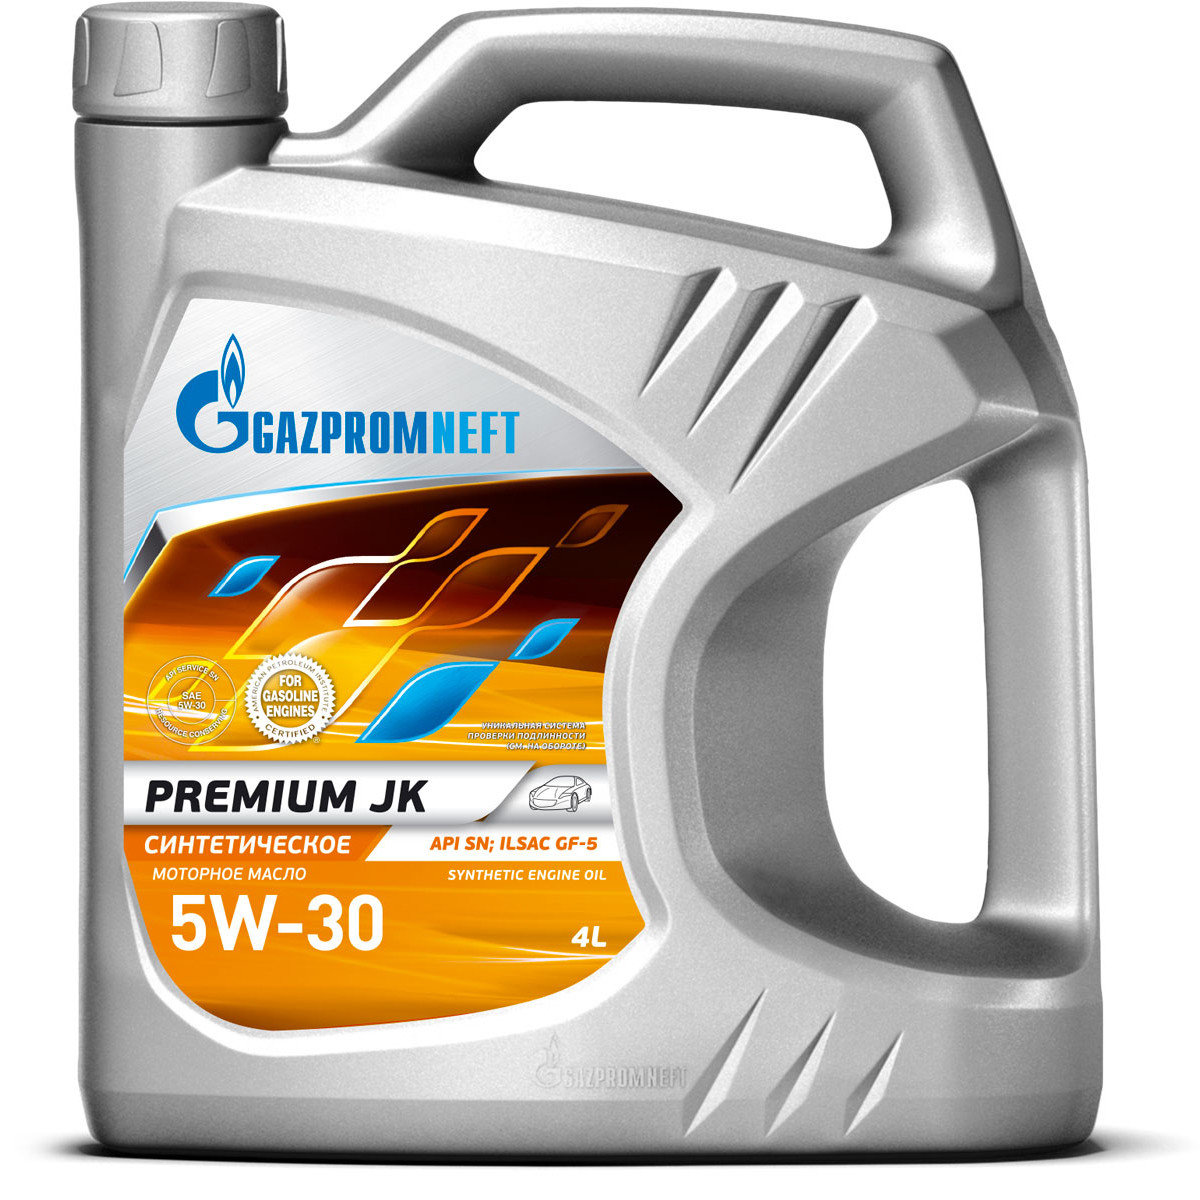 Gazpromneft Premium JK 5W-30 (API SN, ILSAC GF-5) - Gazpromneft G .